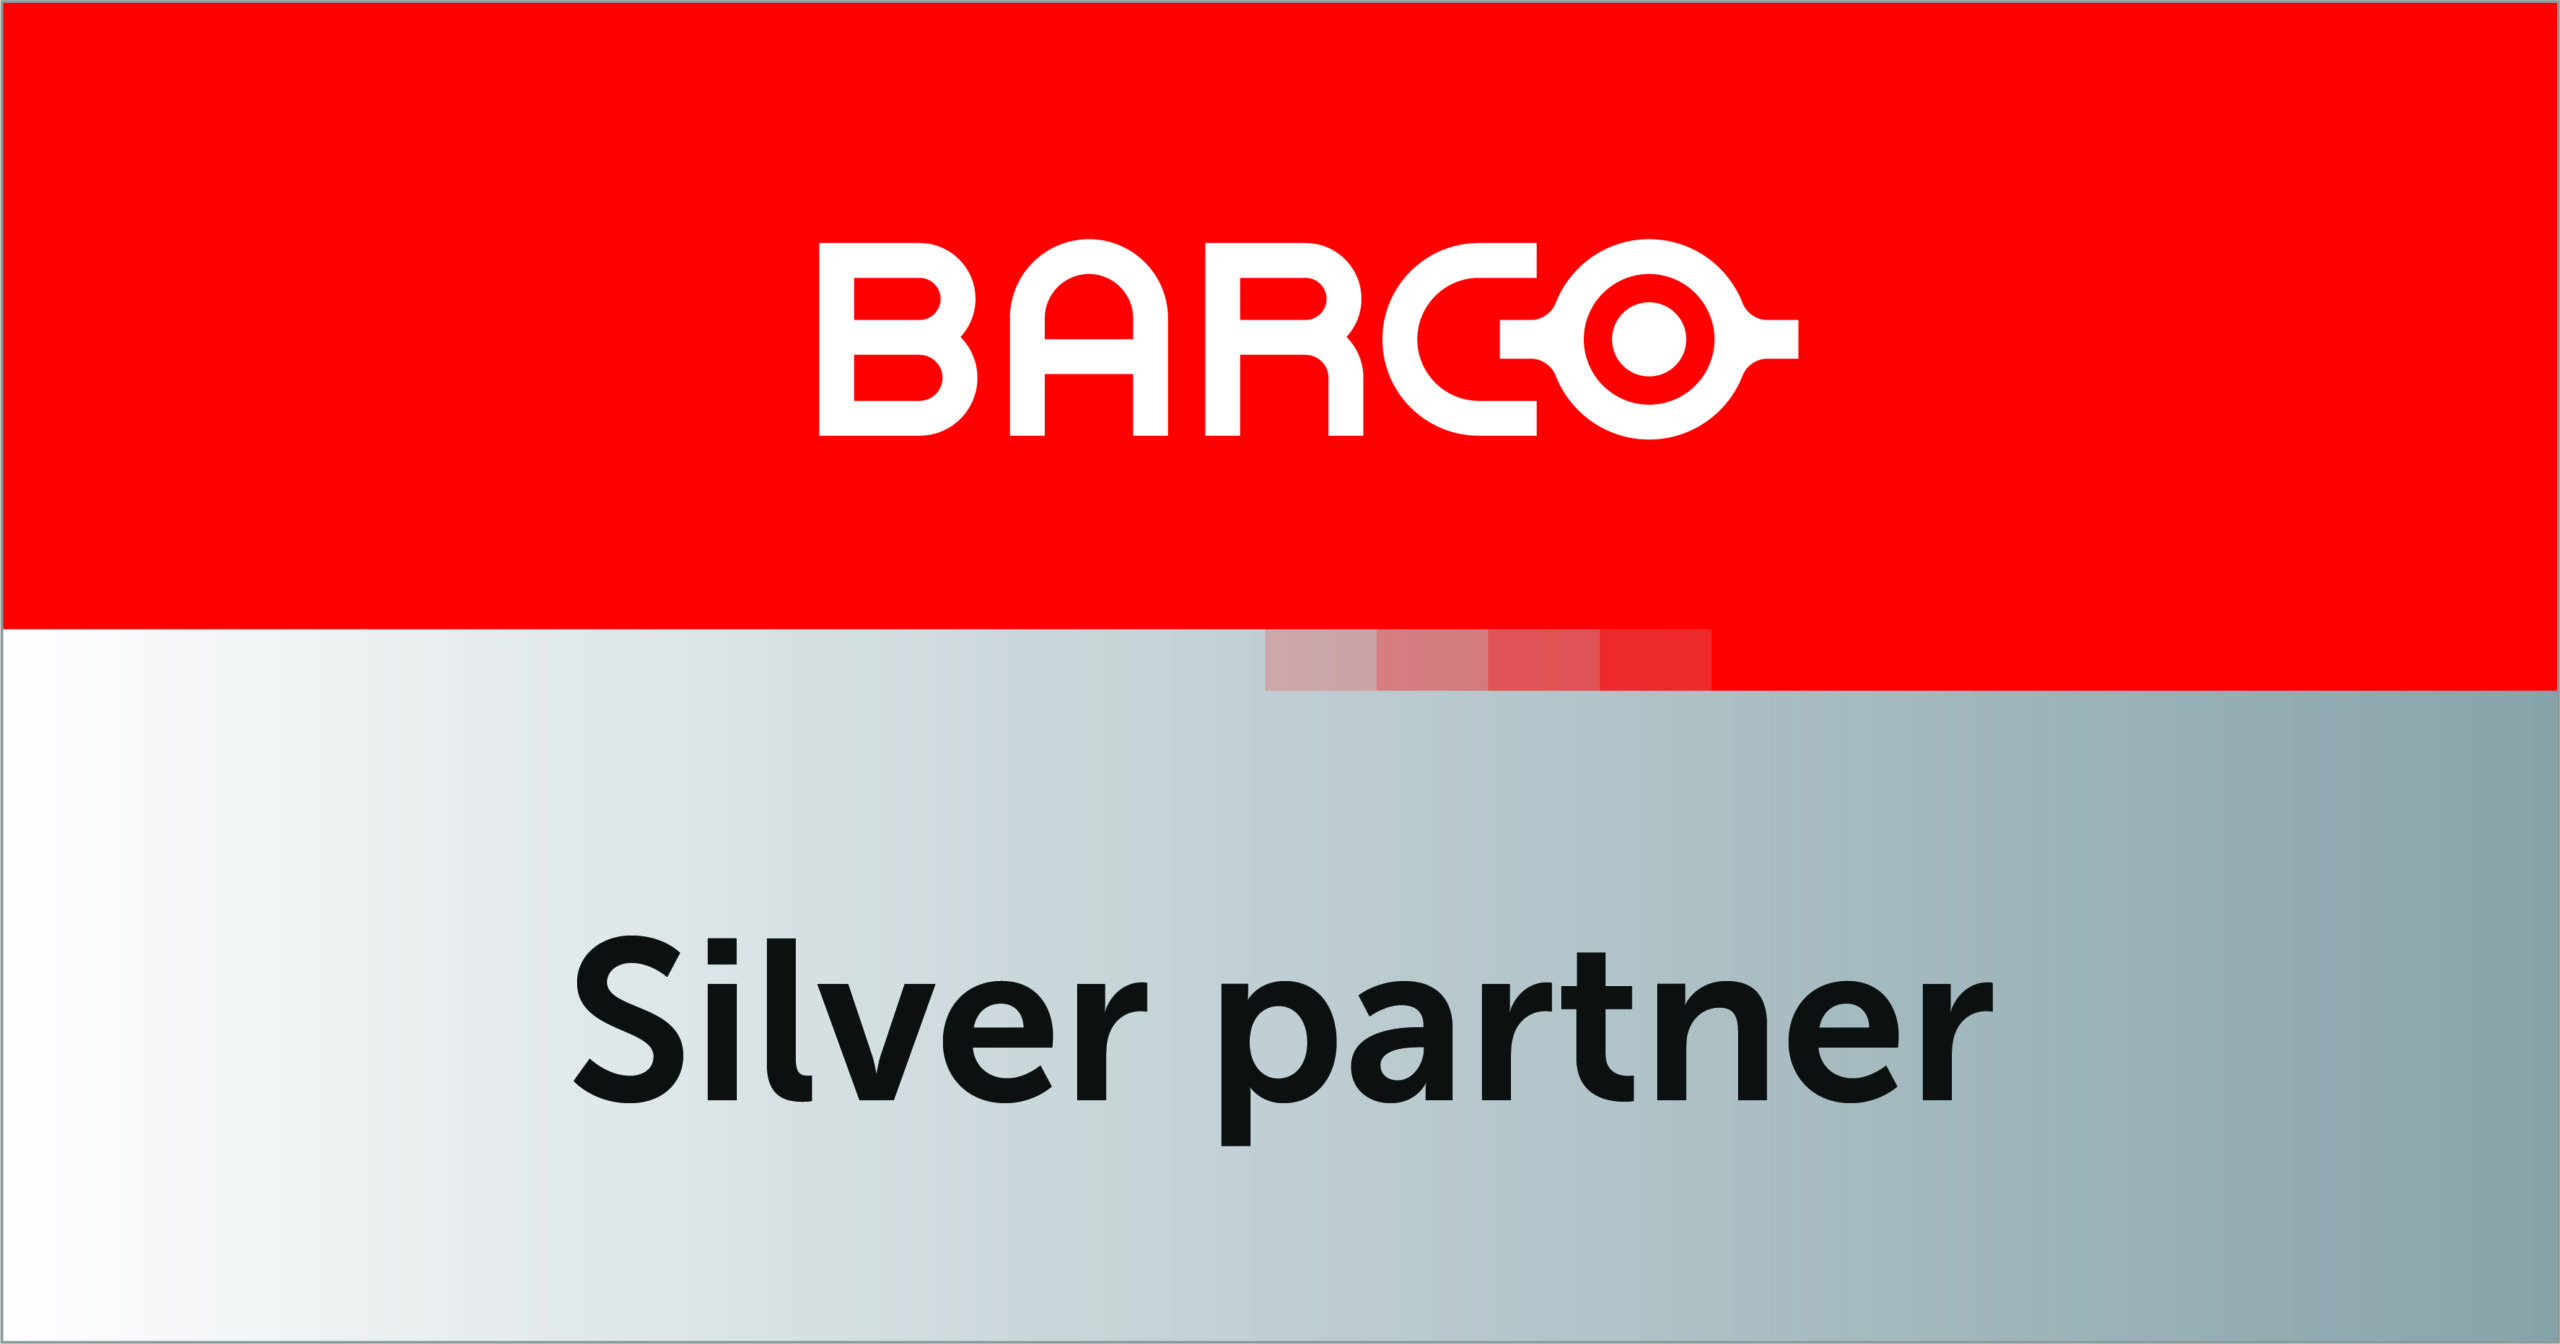 Barco silver partner Audio Visual